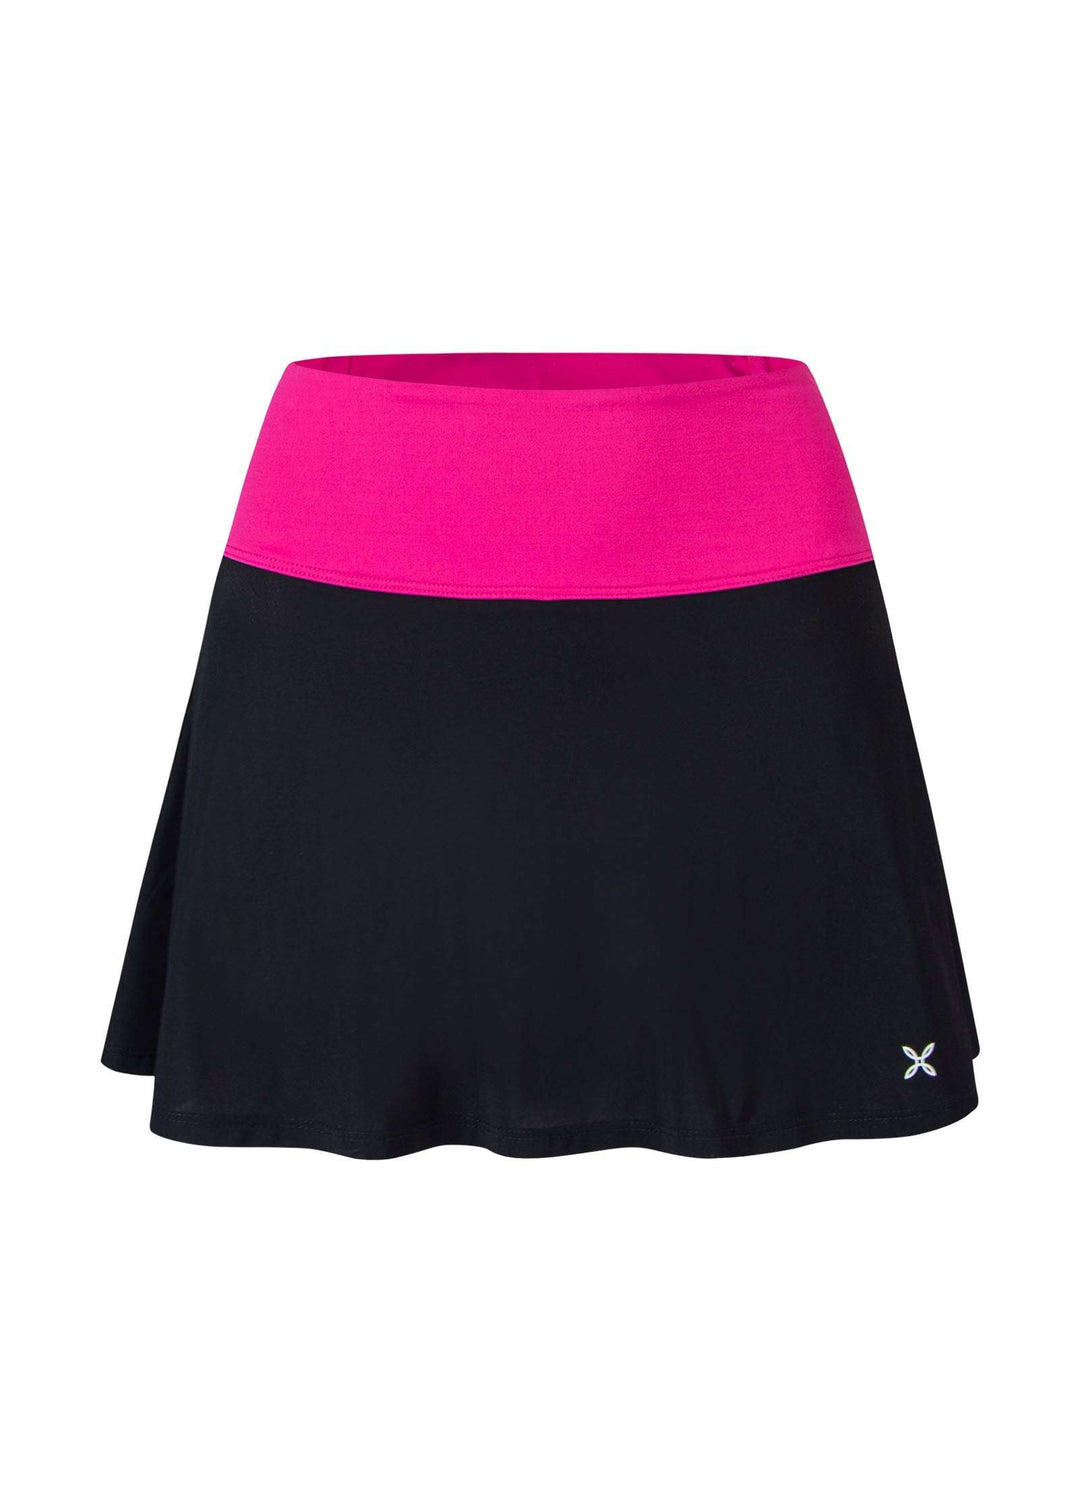 Sensi Smart Skirt+Shorts Woman - Bshop